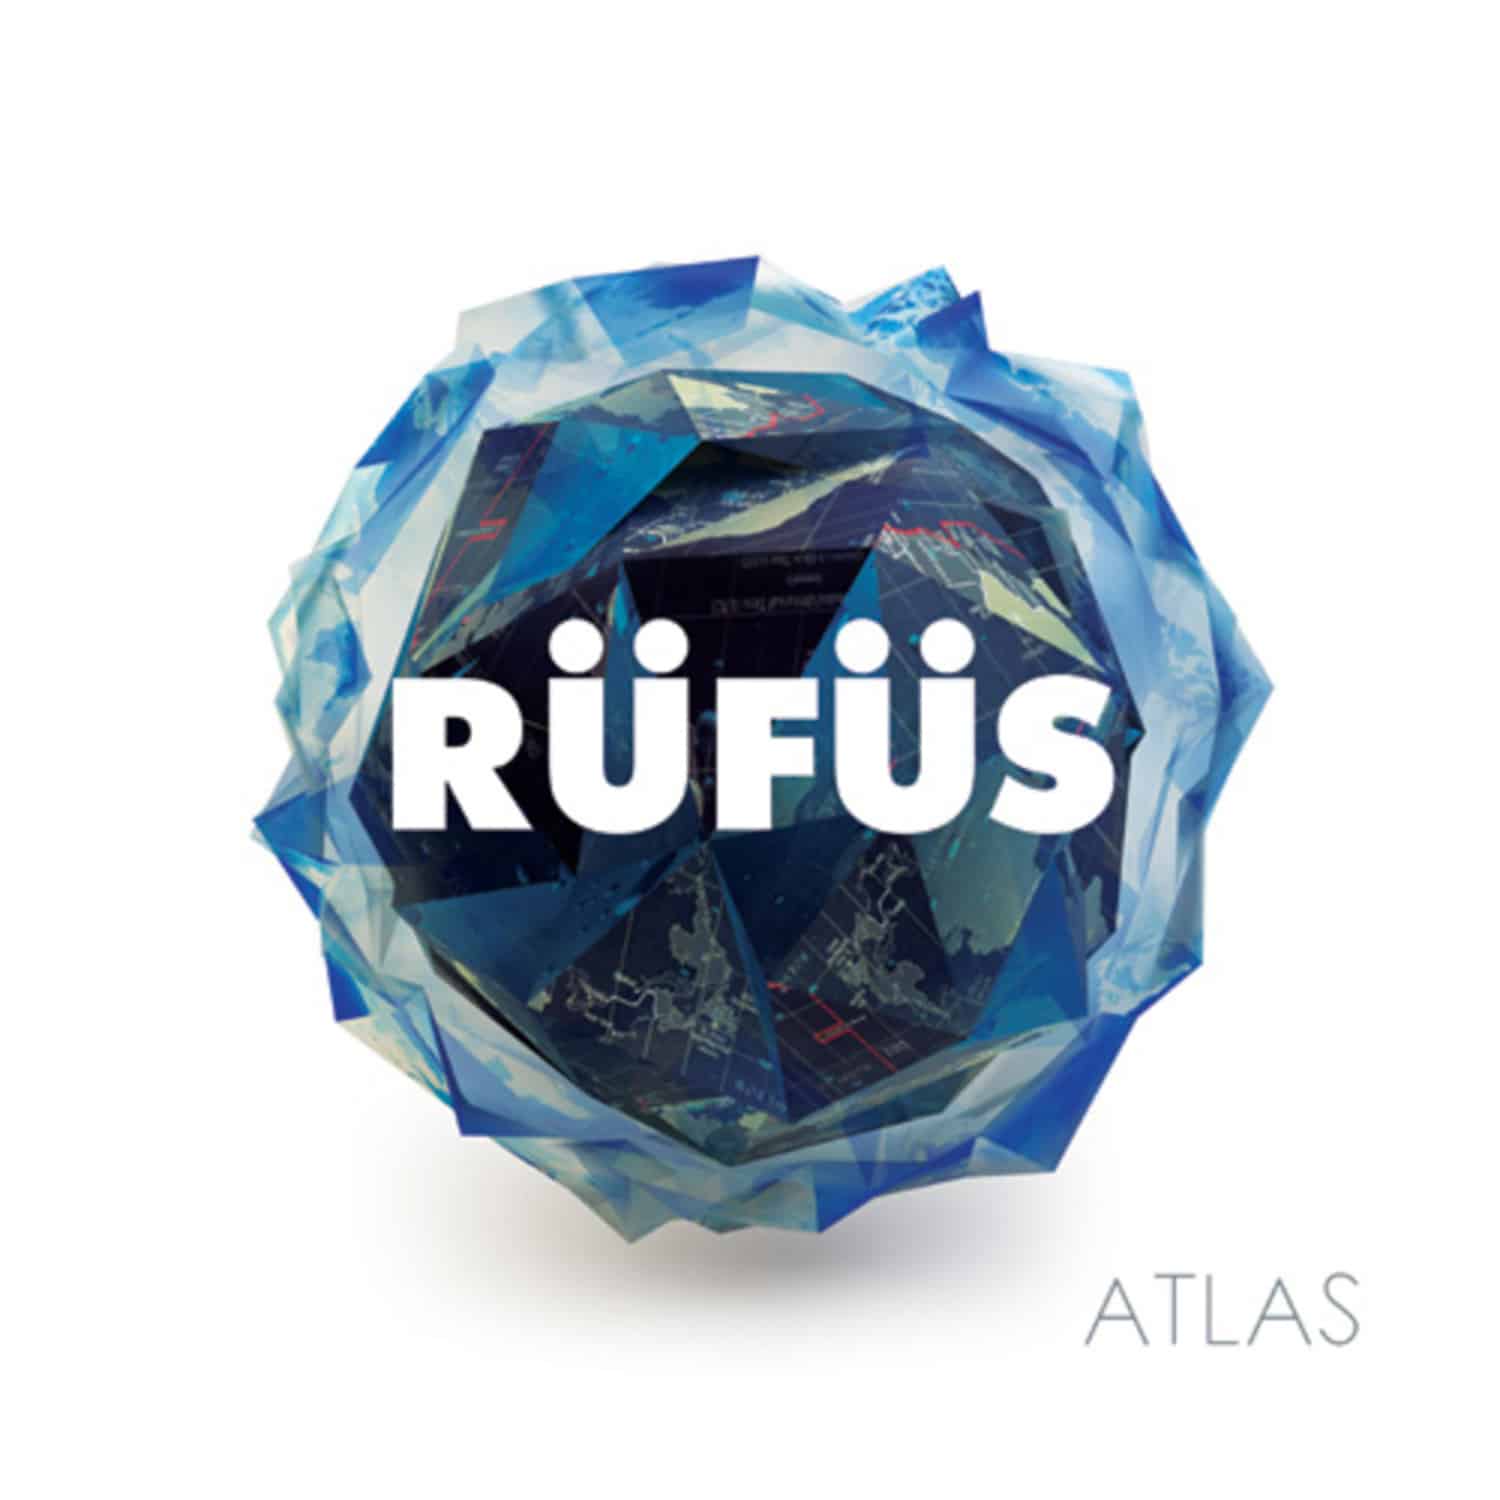 Rufus - ATLAS 